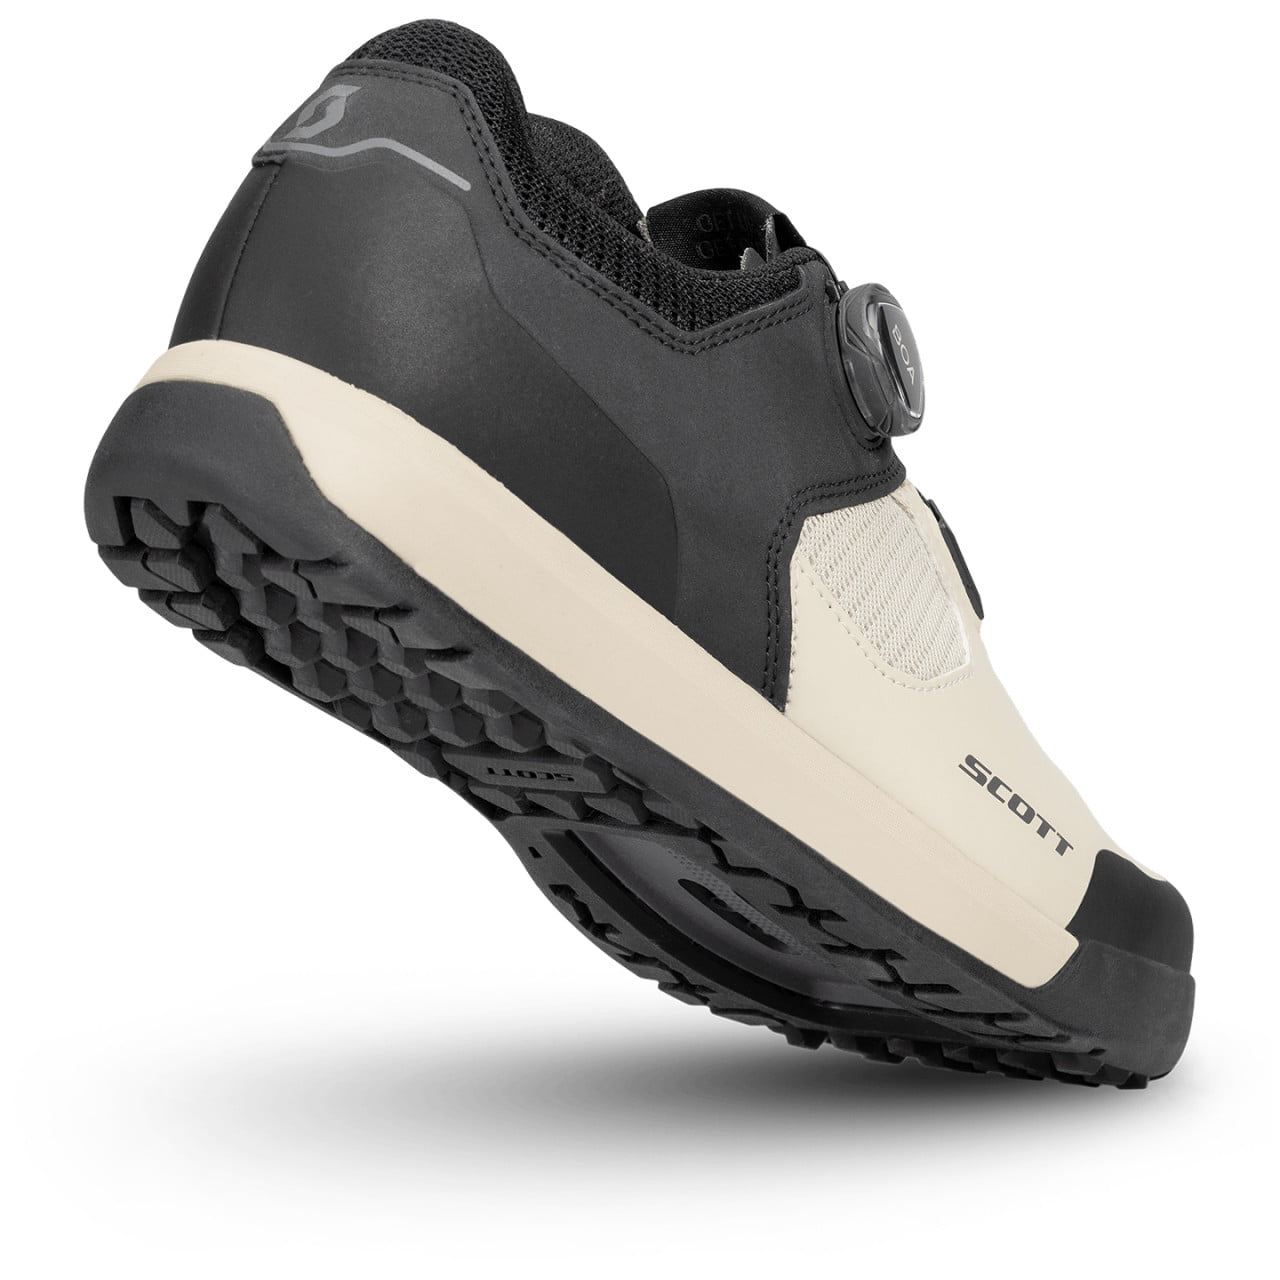 Shr-alp Evo BOA 2024 MTB Shoes